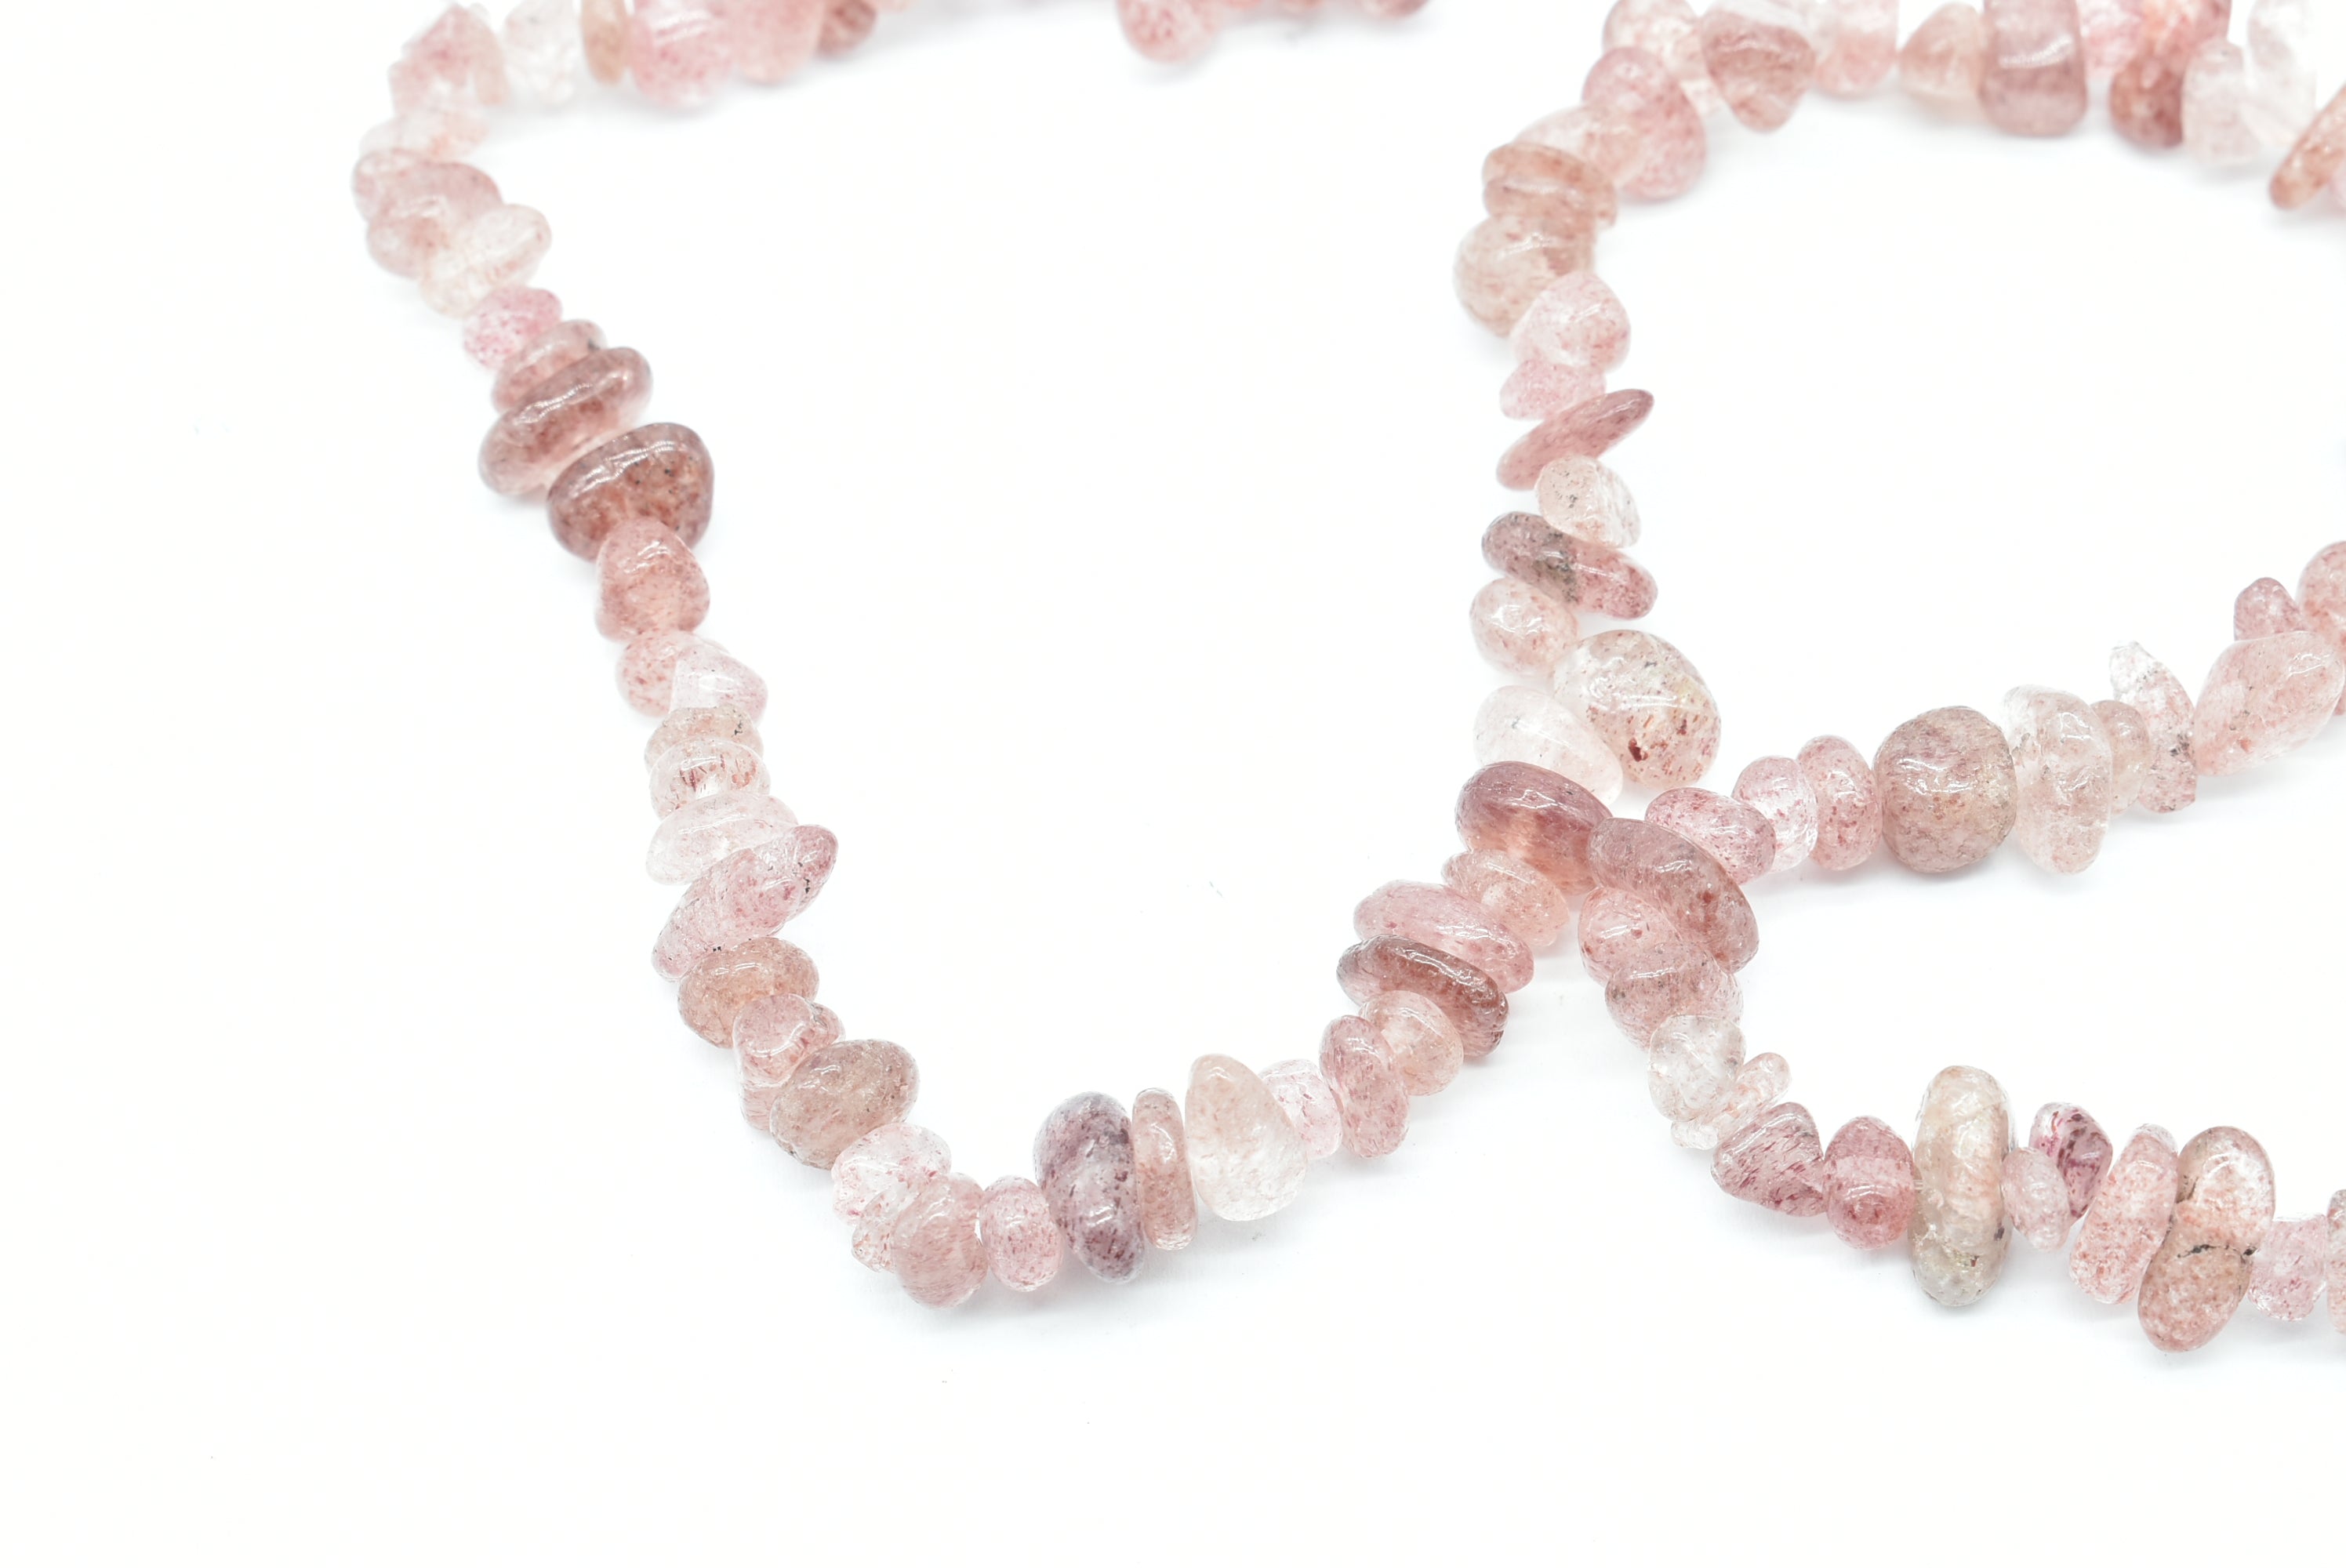 Cherry Quartz stones necklace